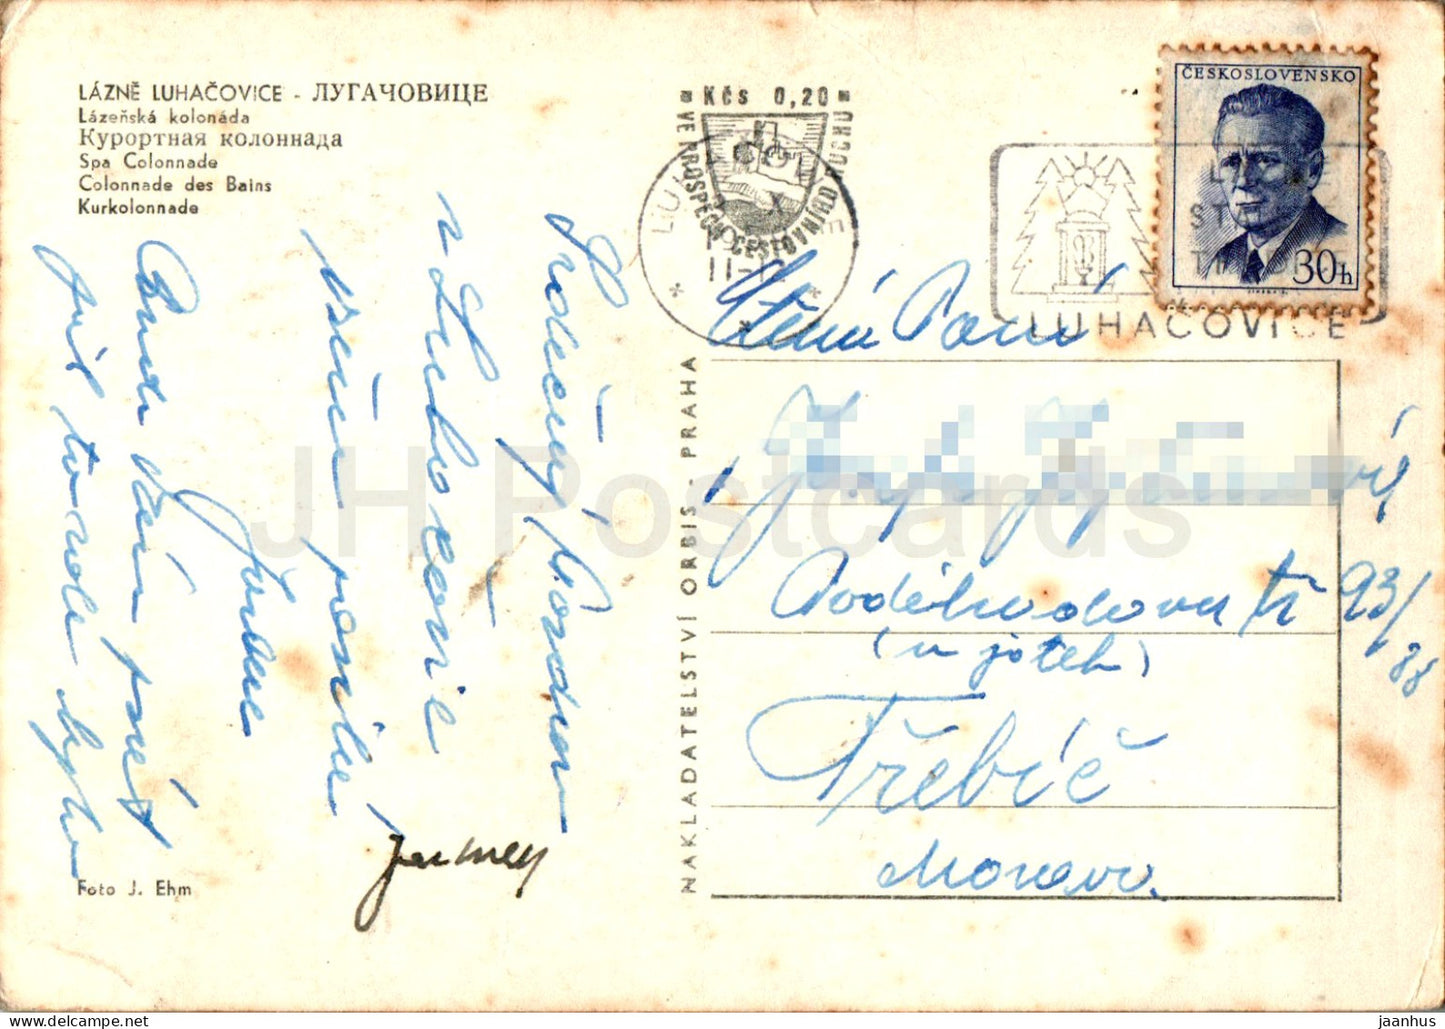 Lazne Luhacovice - Lazenska kolonada - Kurkolonnade - alte Postkarte - 1959 - Tschechische Republik - Tschechoslowakei - gebraucht